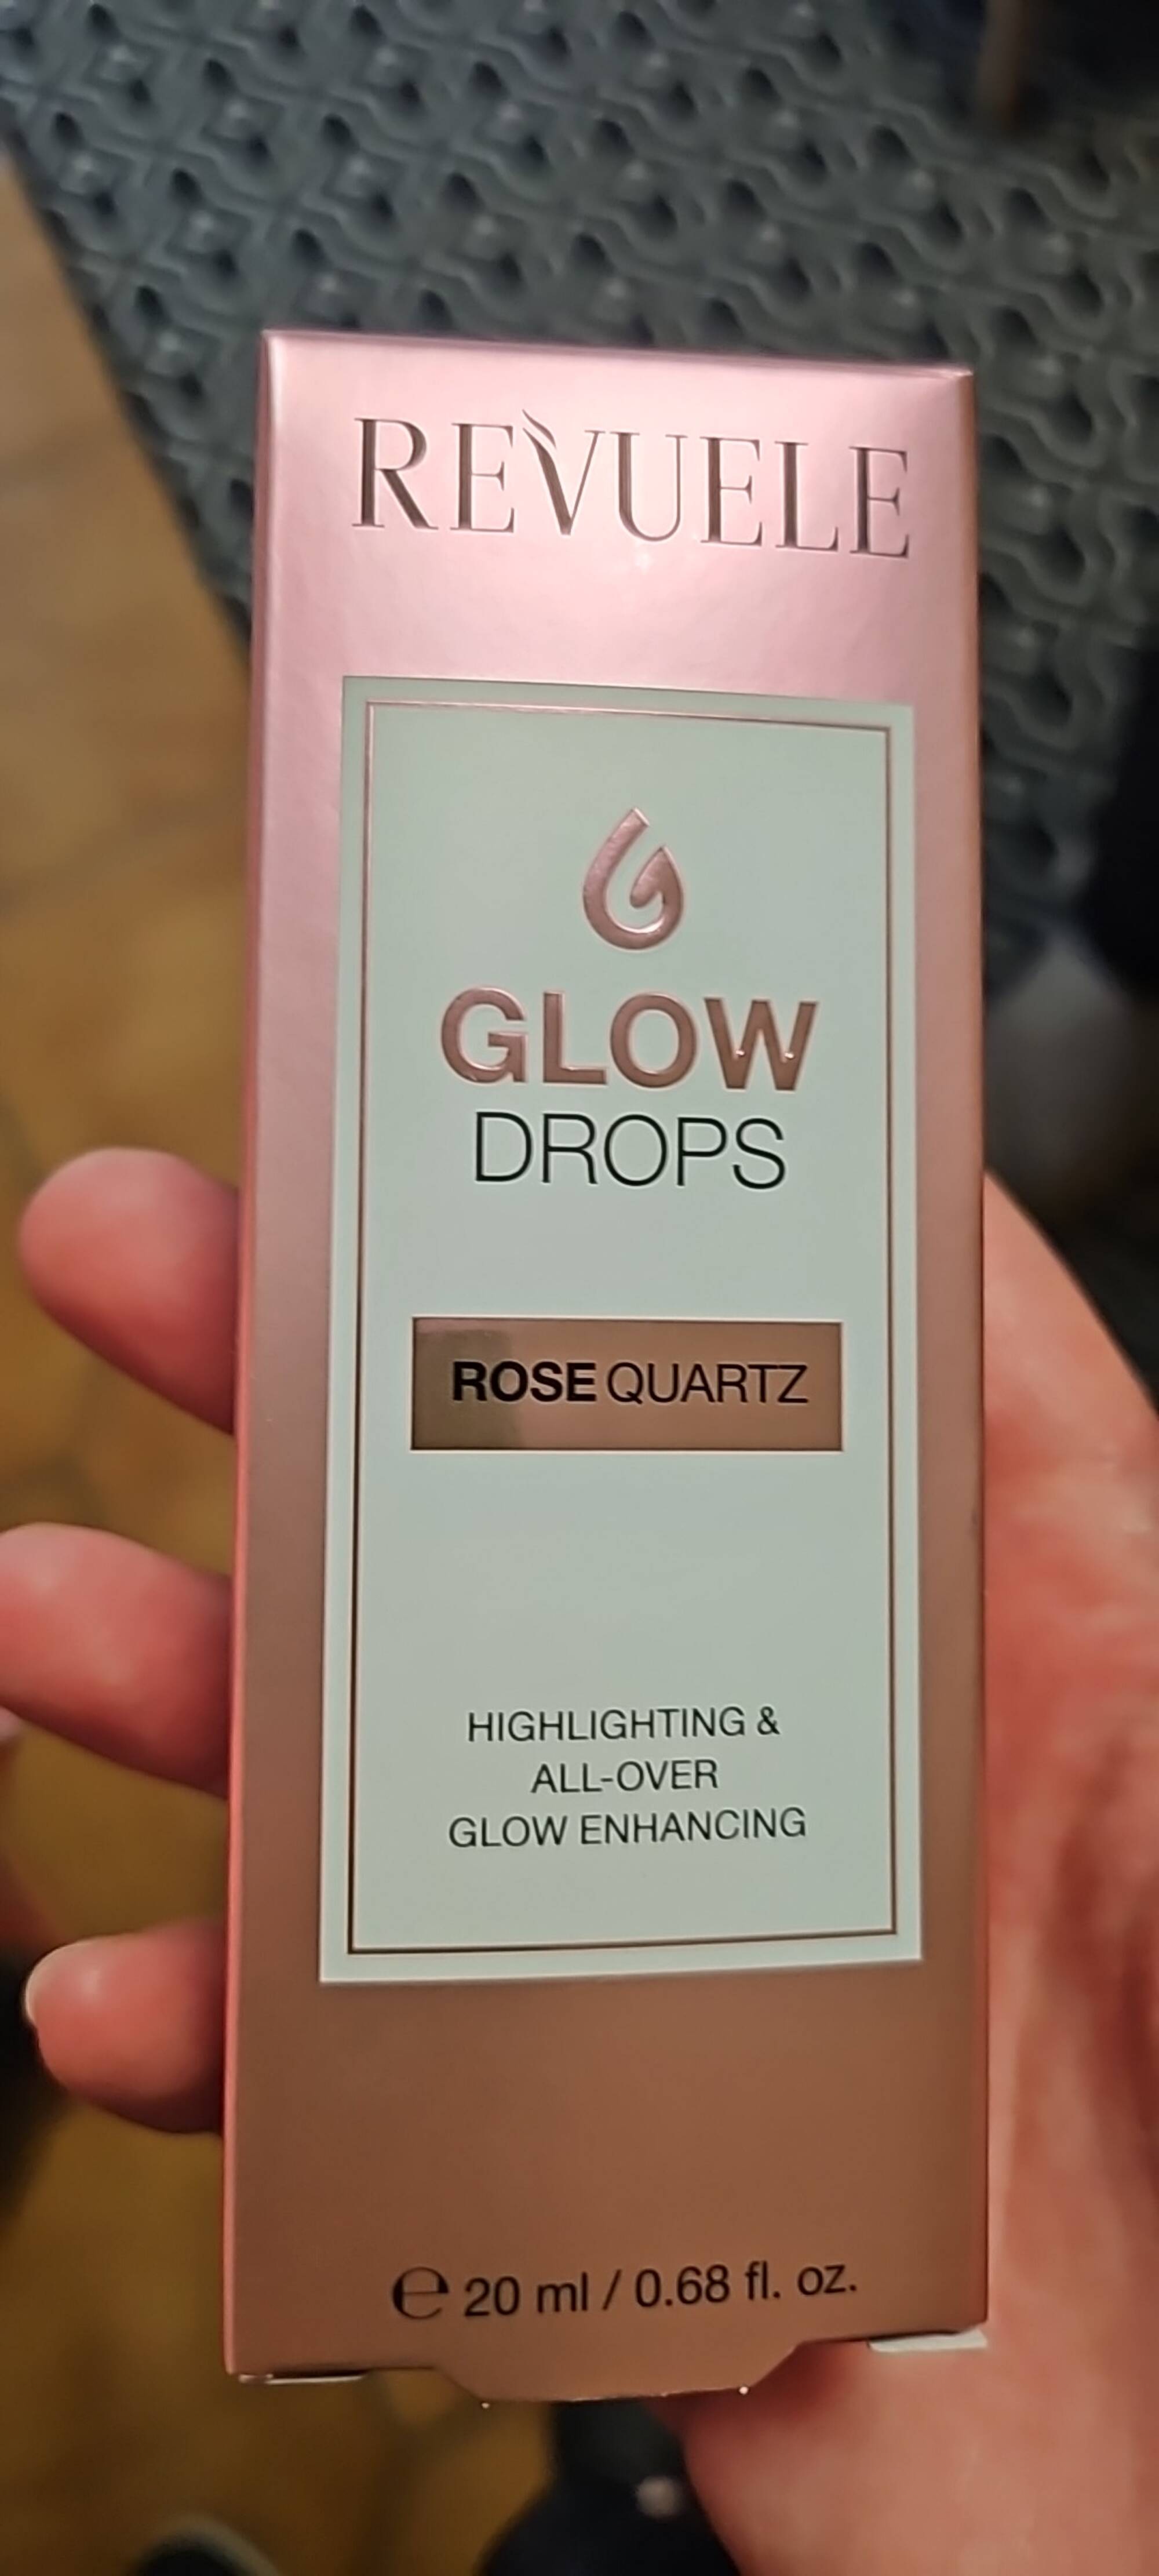 REVUELE - Glow drops rose quartz